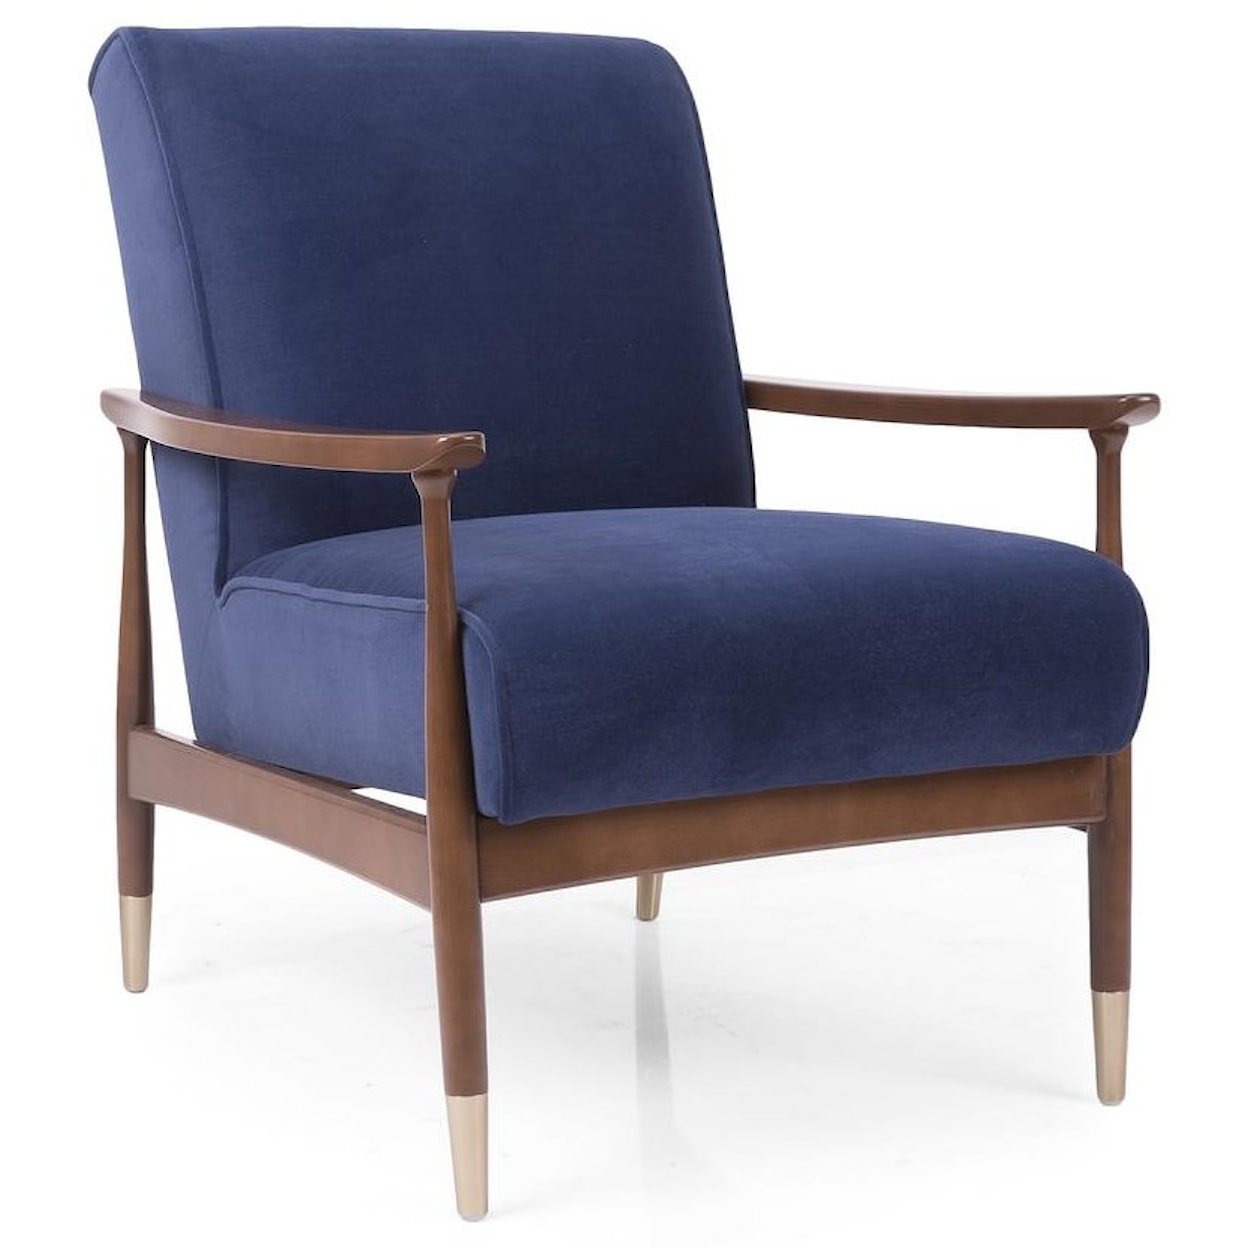 Taelor Designs Willam Chair